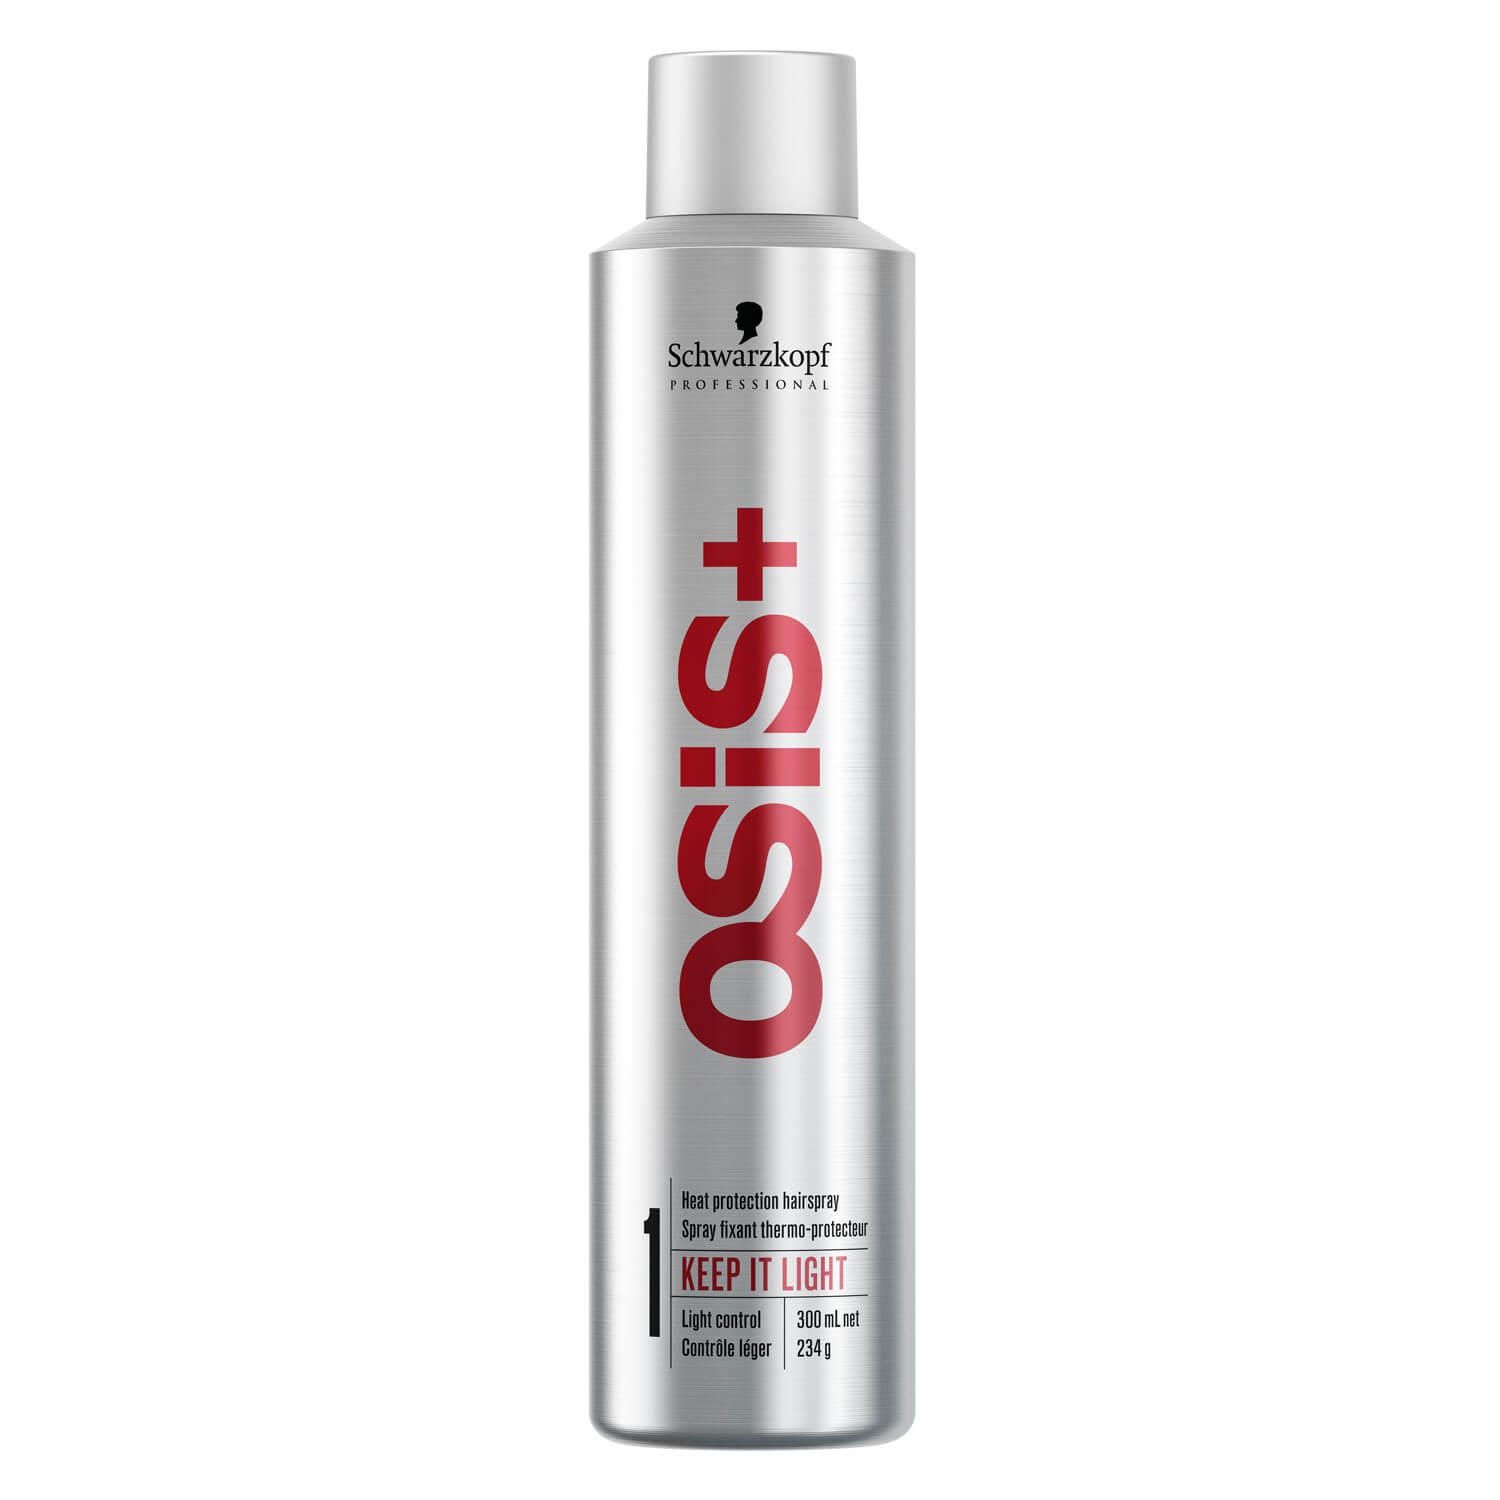 Osis - Keep it Light Heat Protection Hairspray